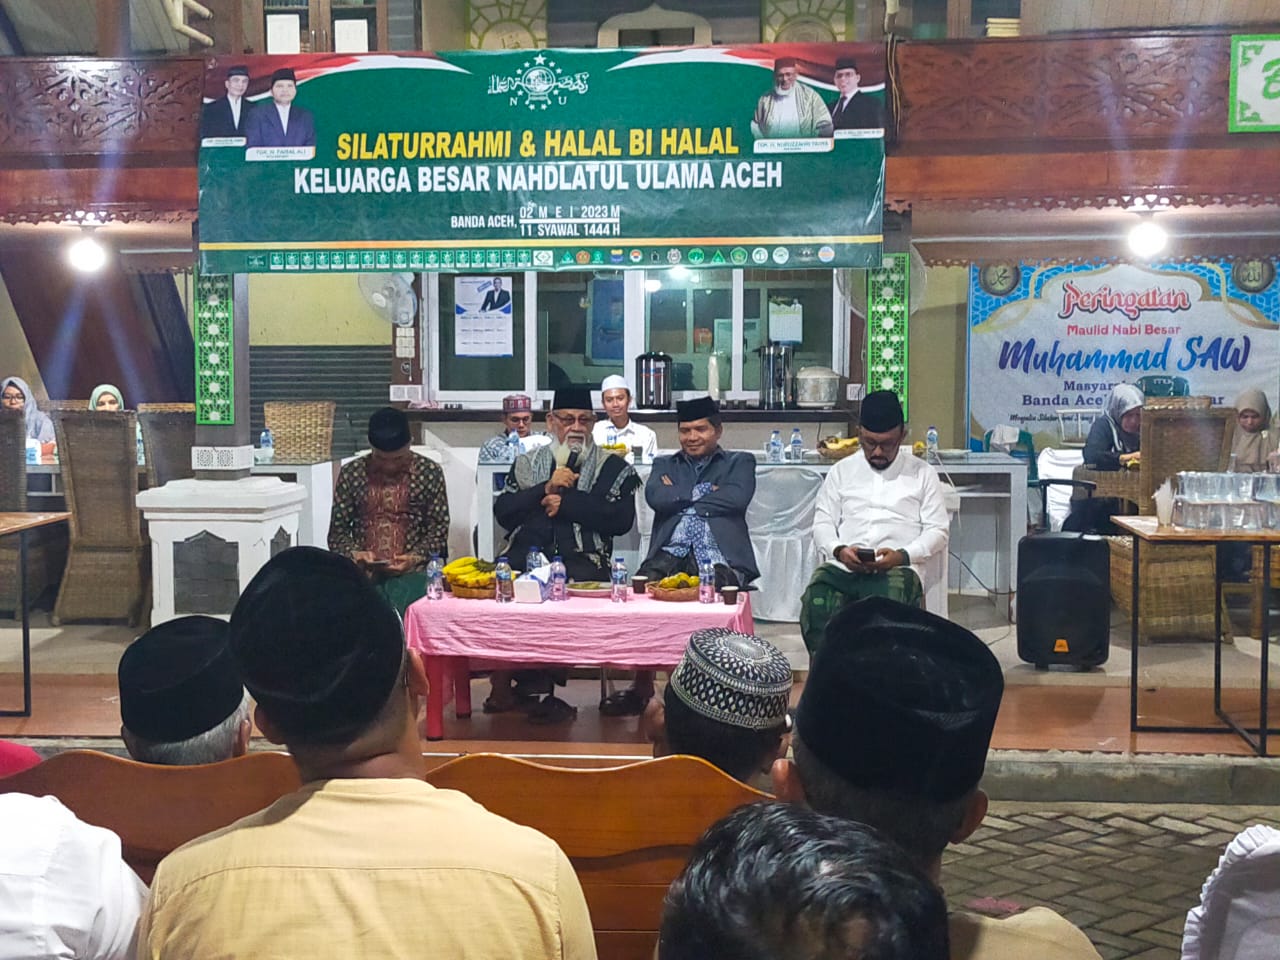 Halal Bihalal NU Aceh, Ini Pesan Waled Nu